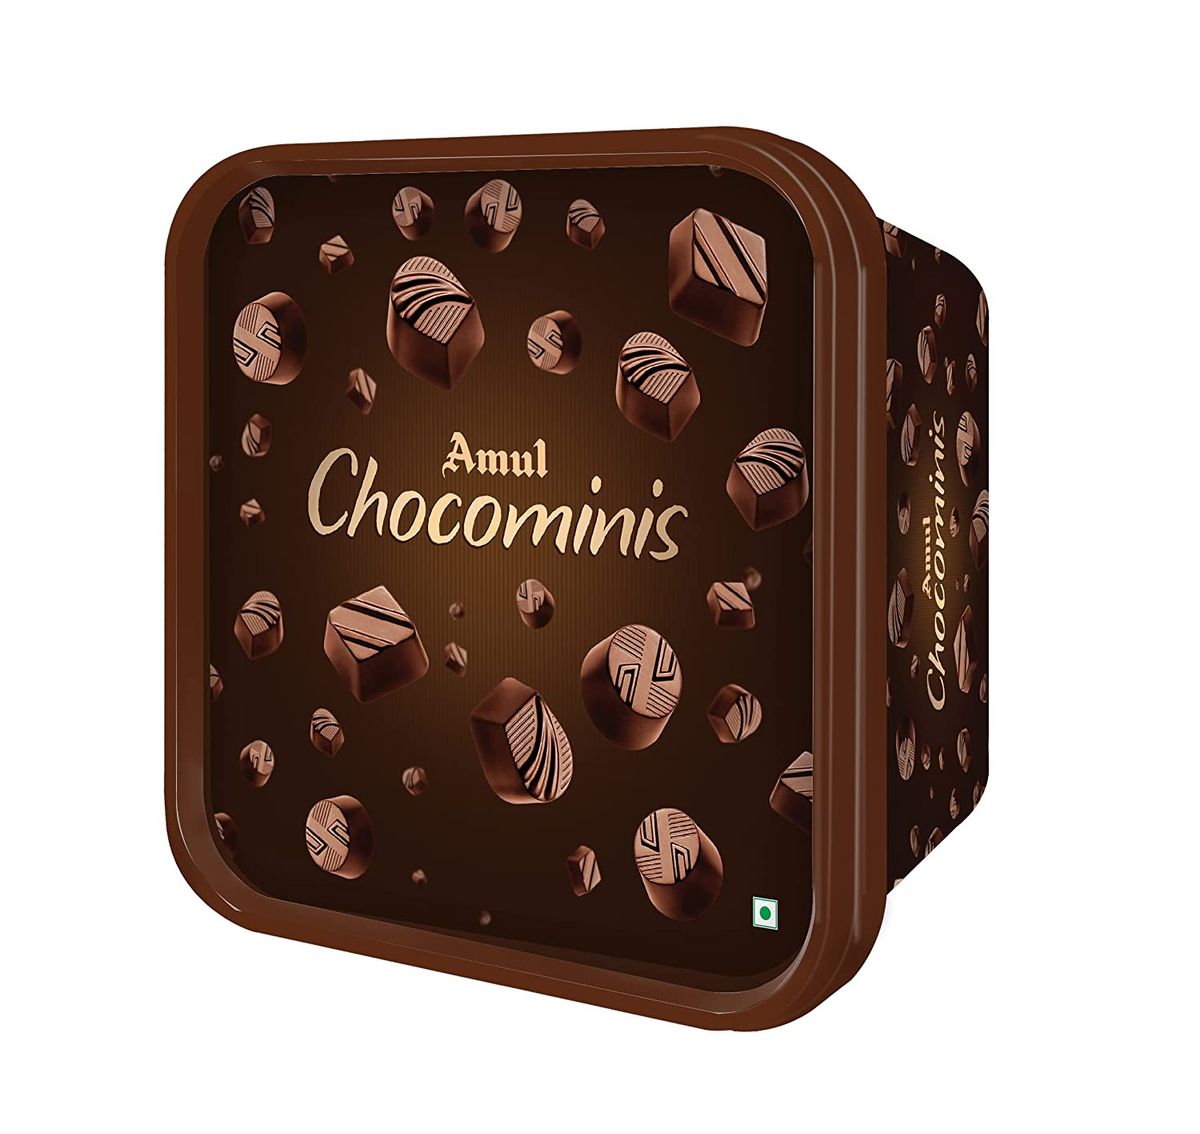 Amul Chocomini Chocolate - Ariso